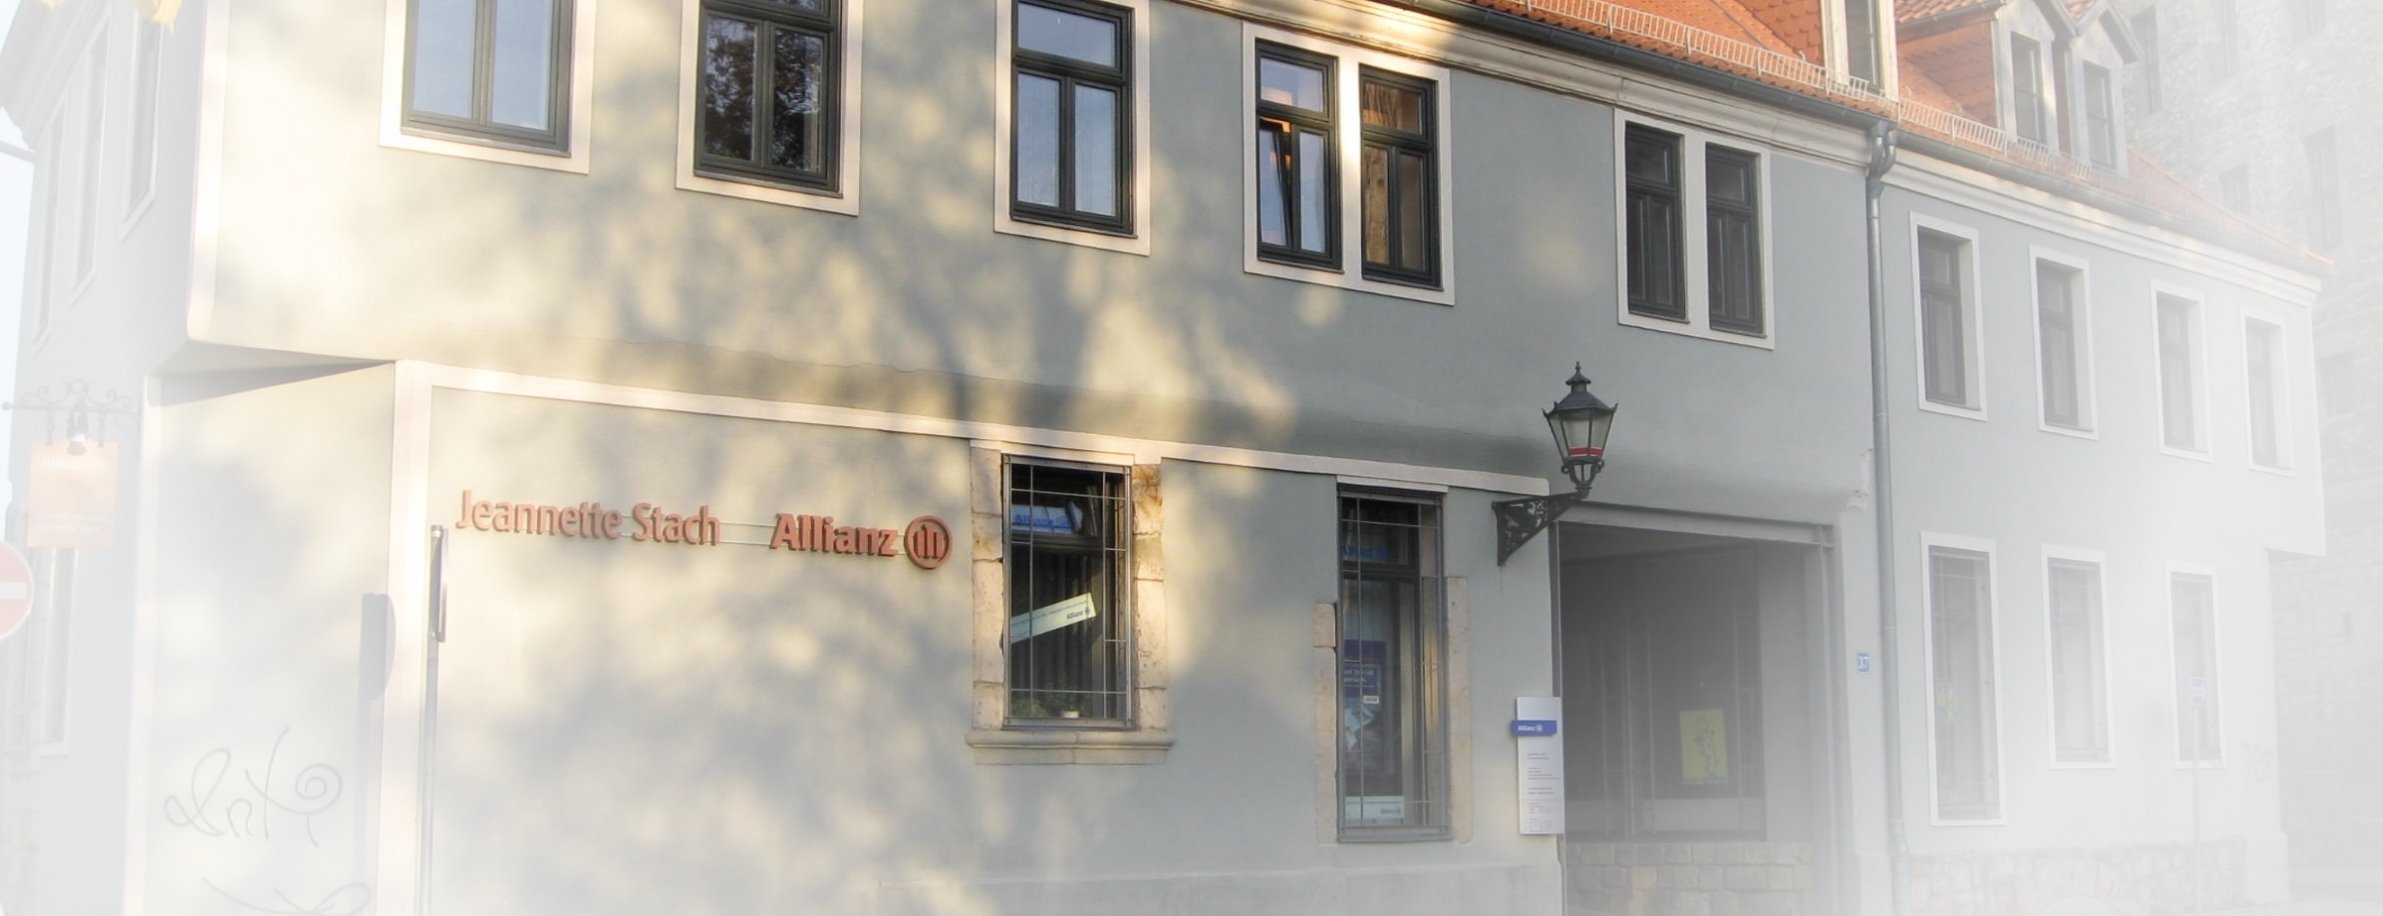 Allianz Versicherung Jörg Anspieler Halberstadt - Titelbild